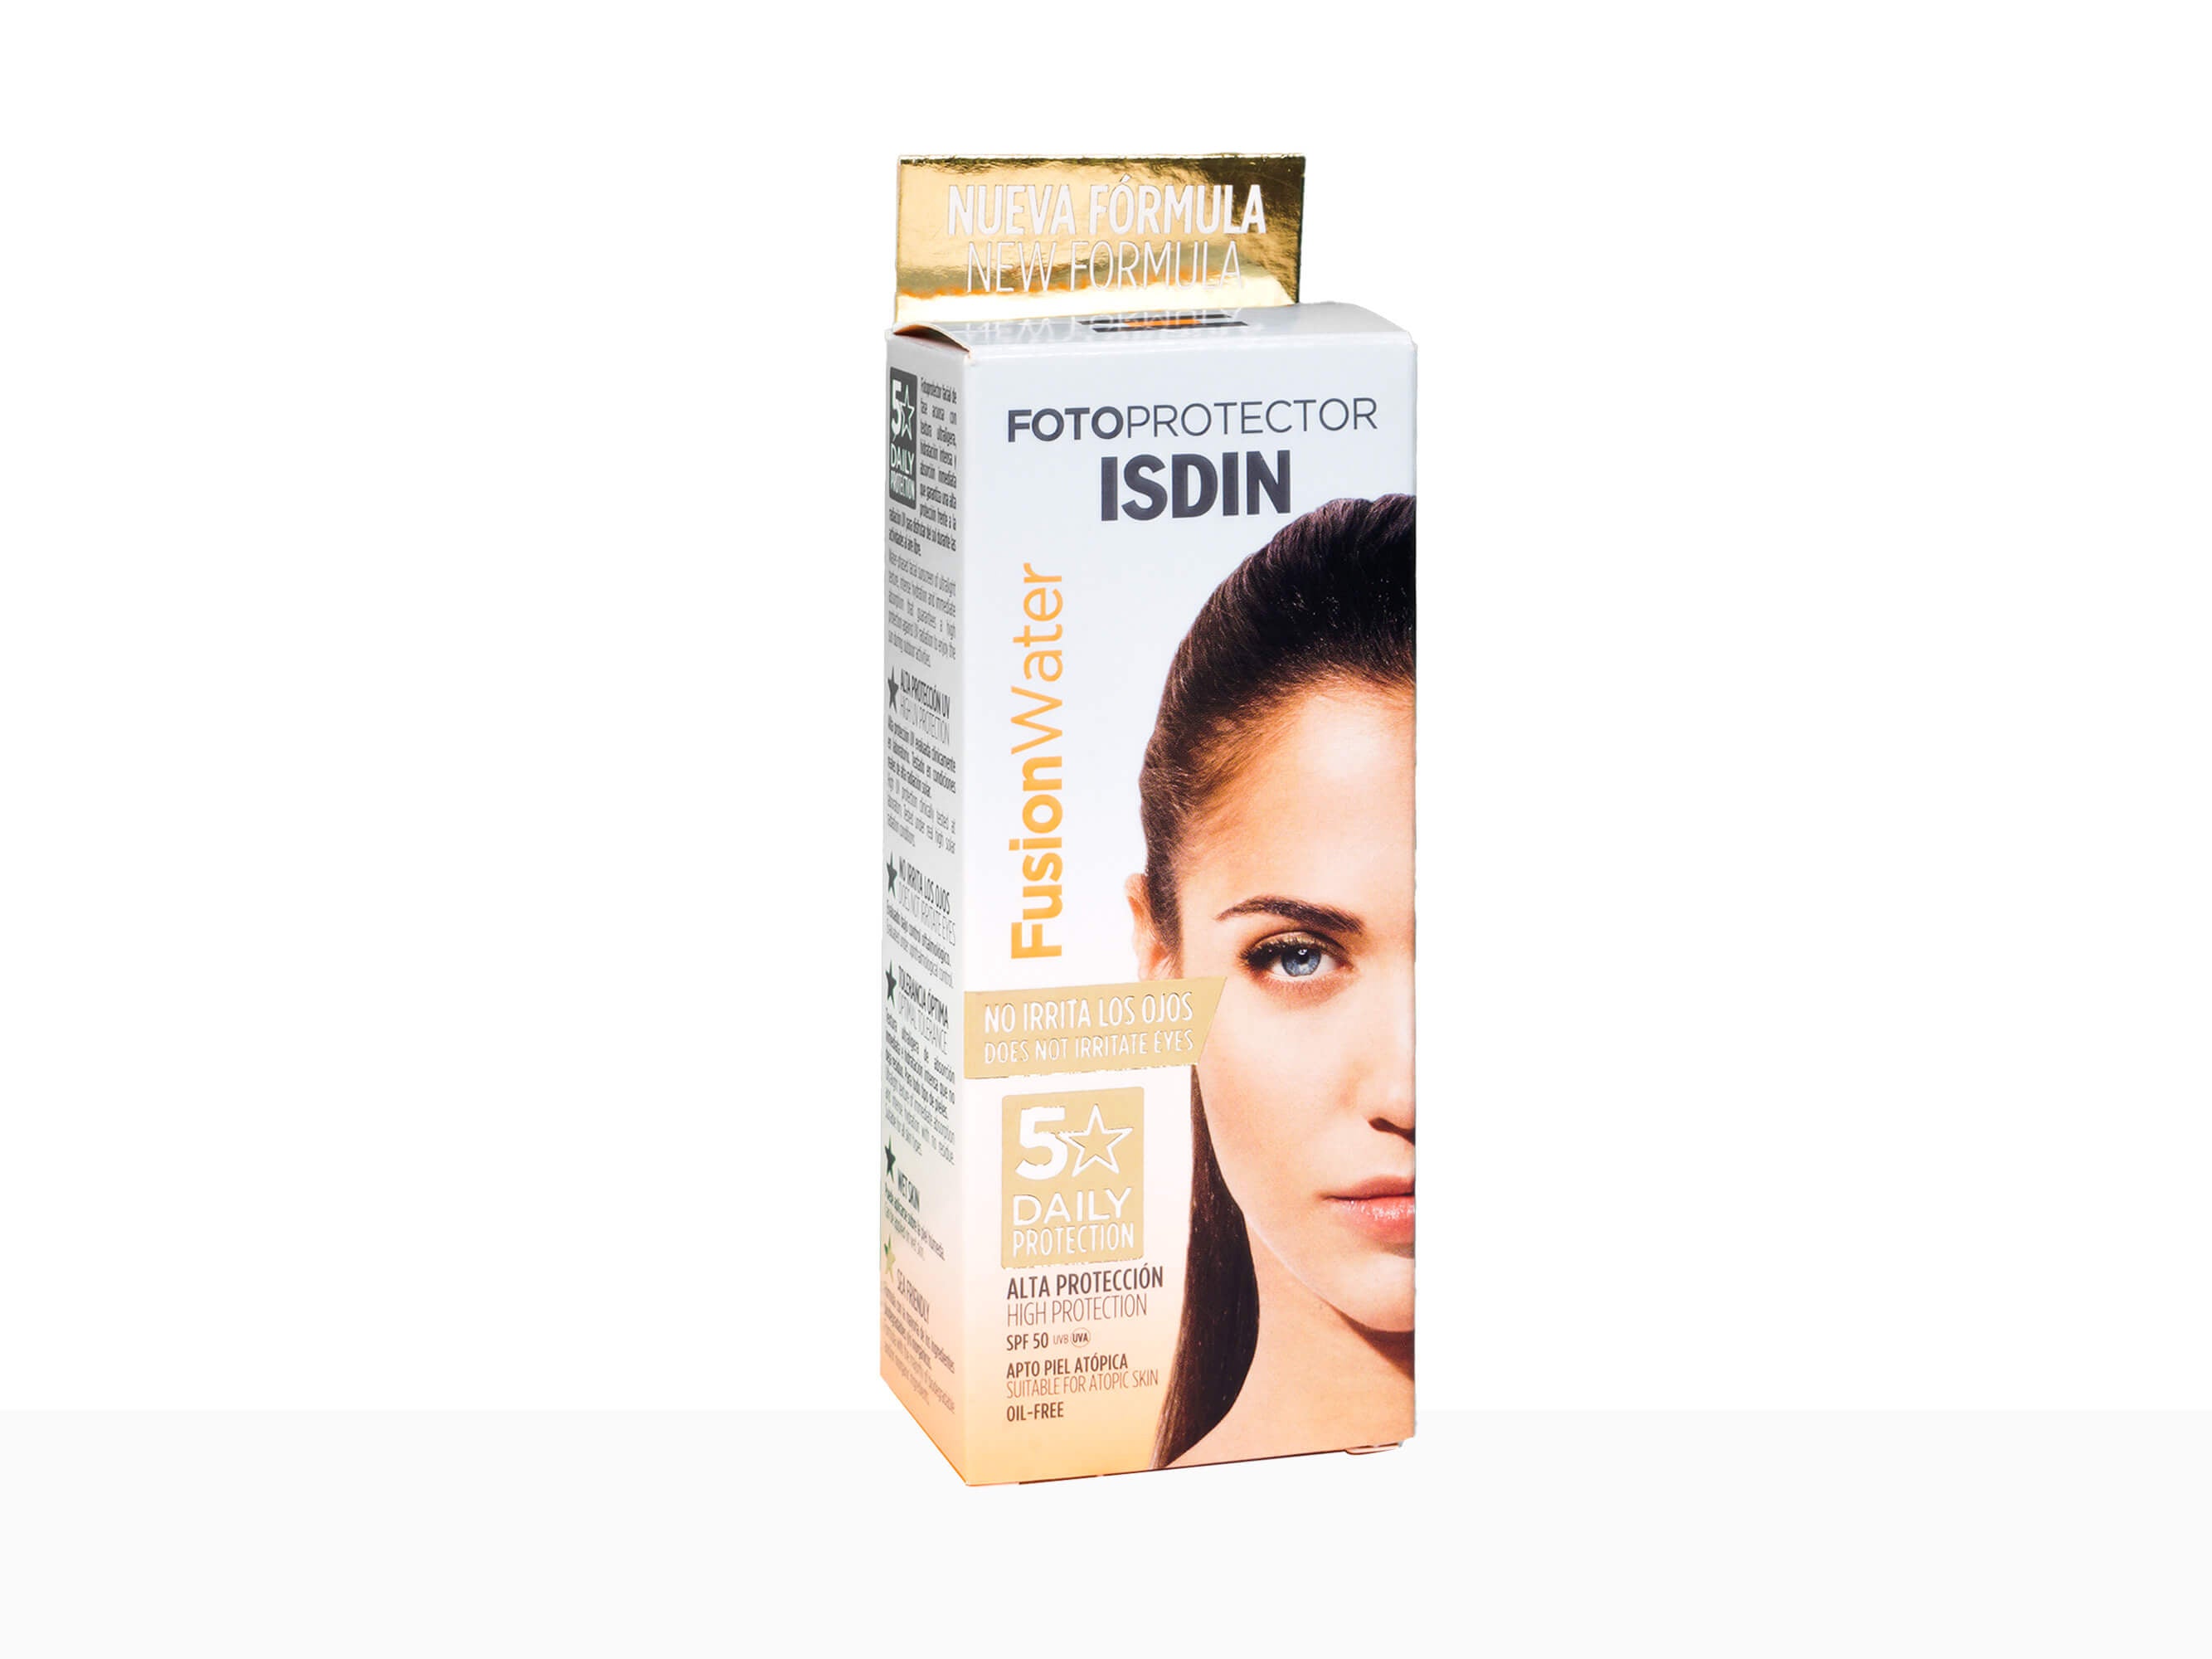 ISDIN Fotoprotector Fusion Water Sunscreen SPF 50+-Clinikally